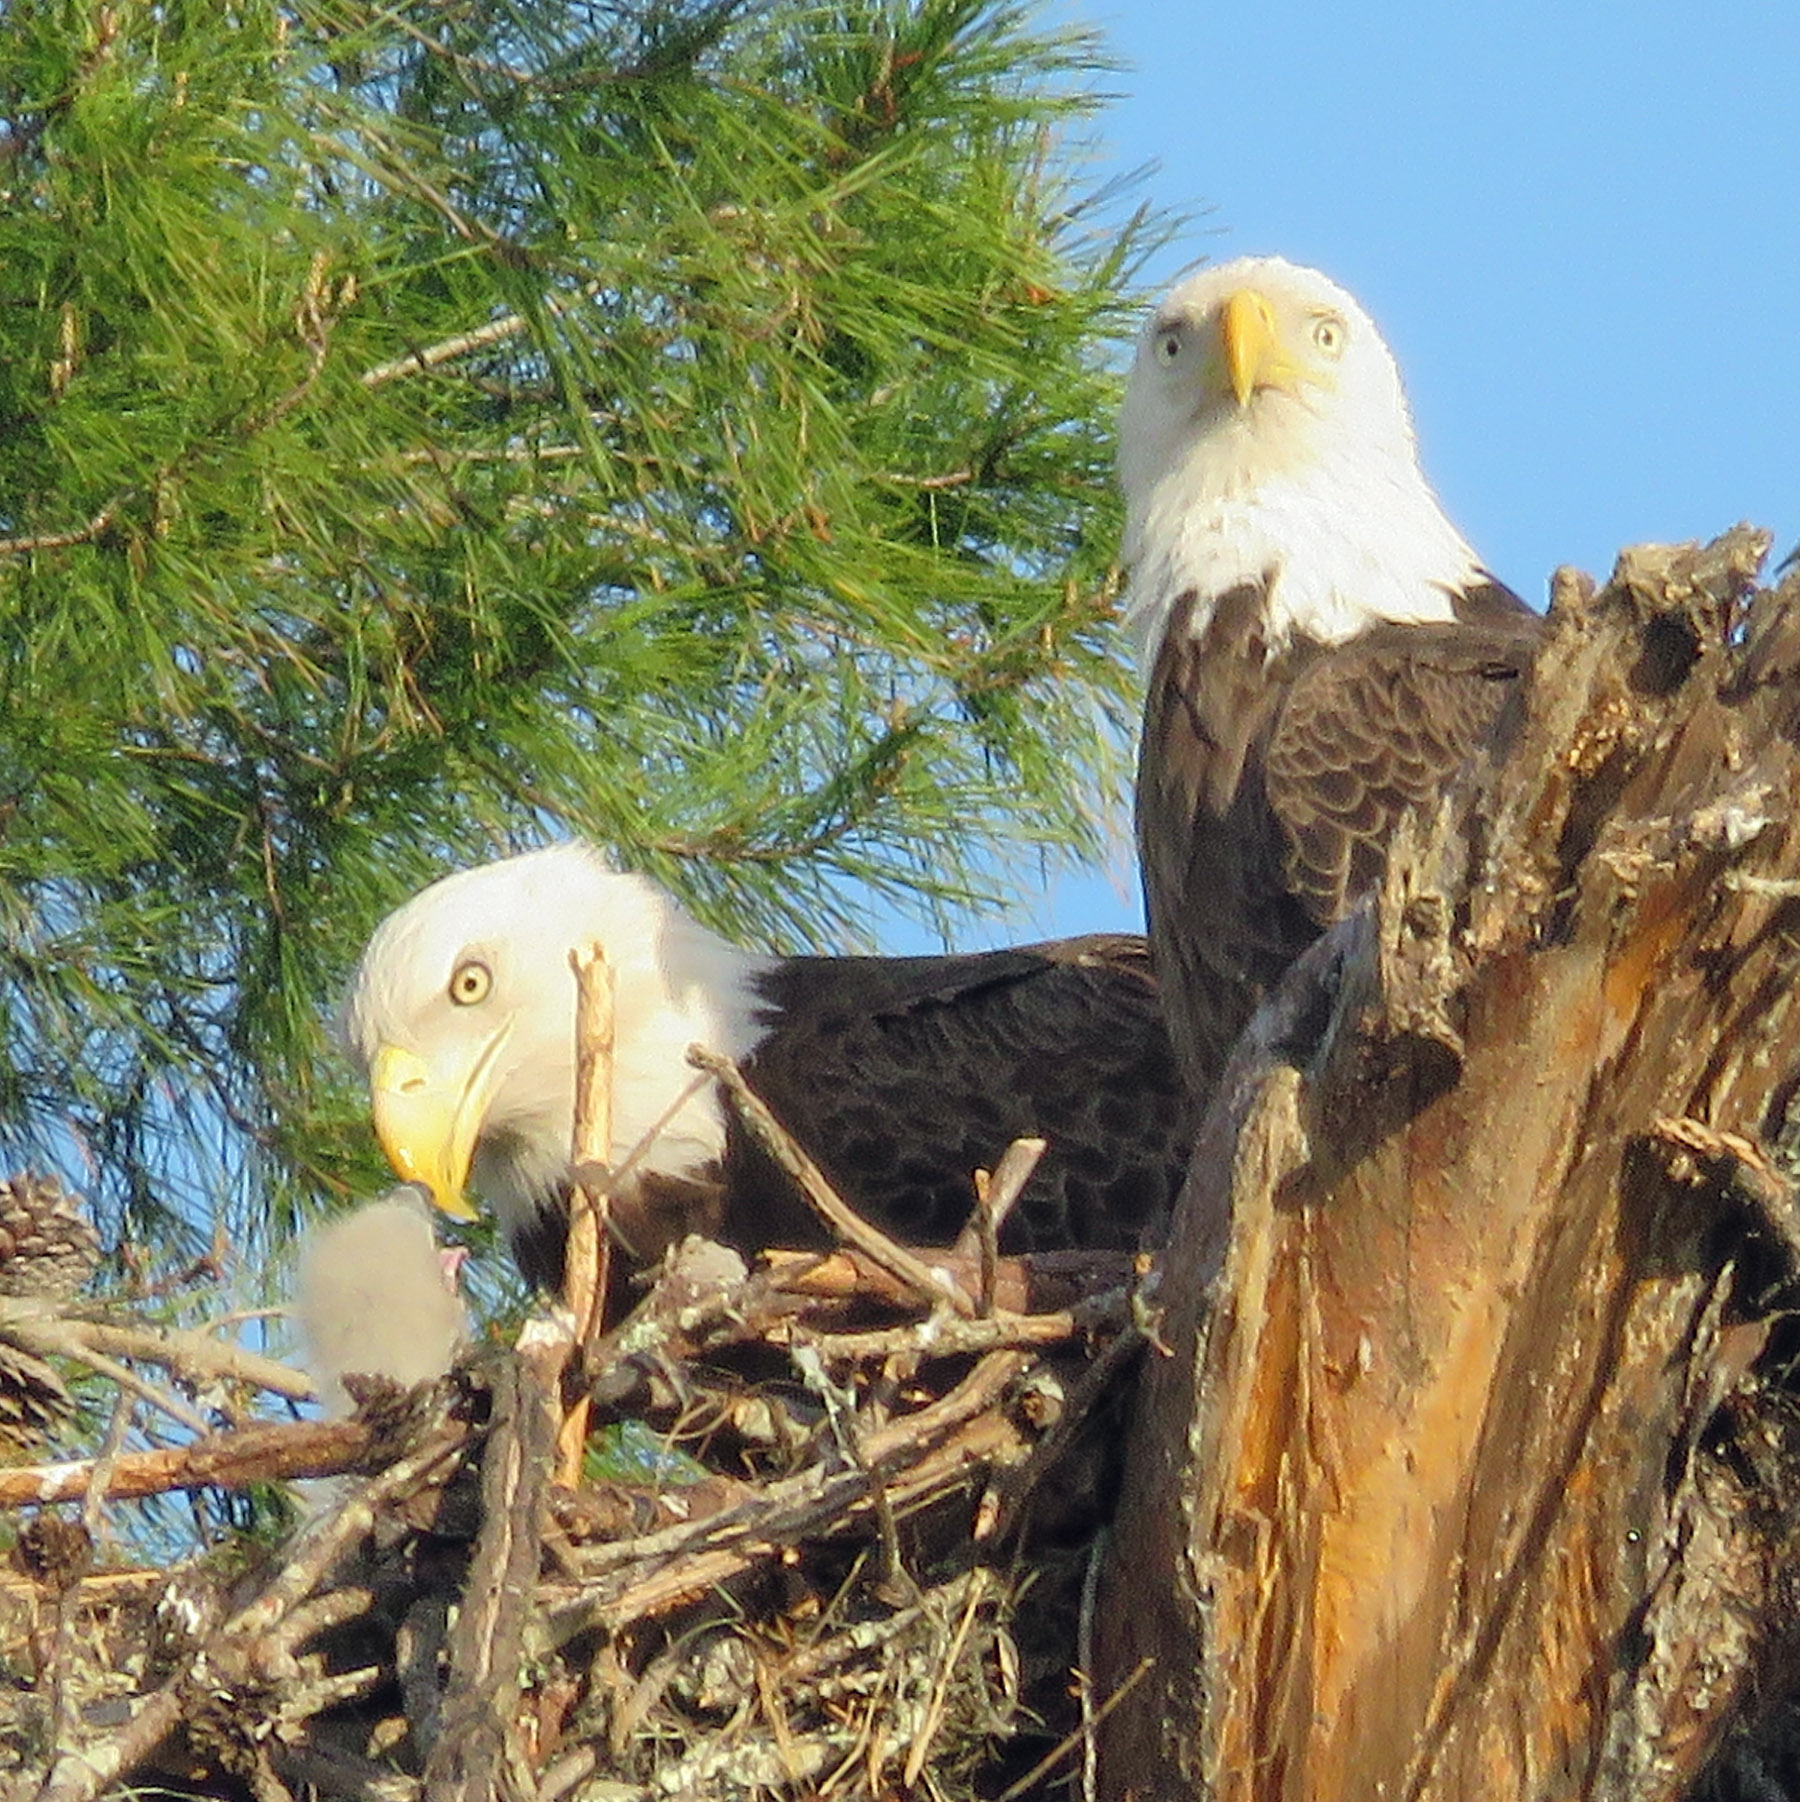 Nesting bald eagle family at Tiger Creek Preserve. 